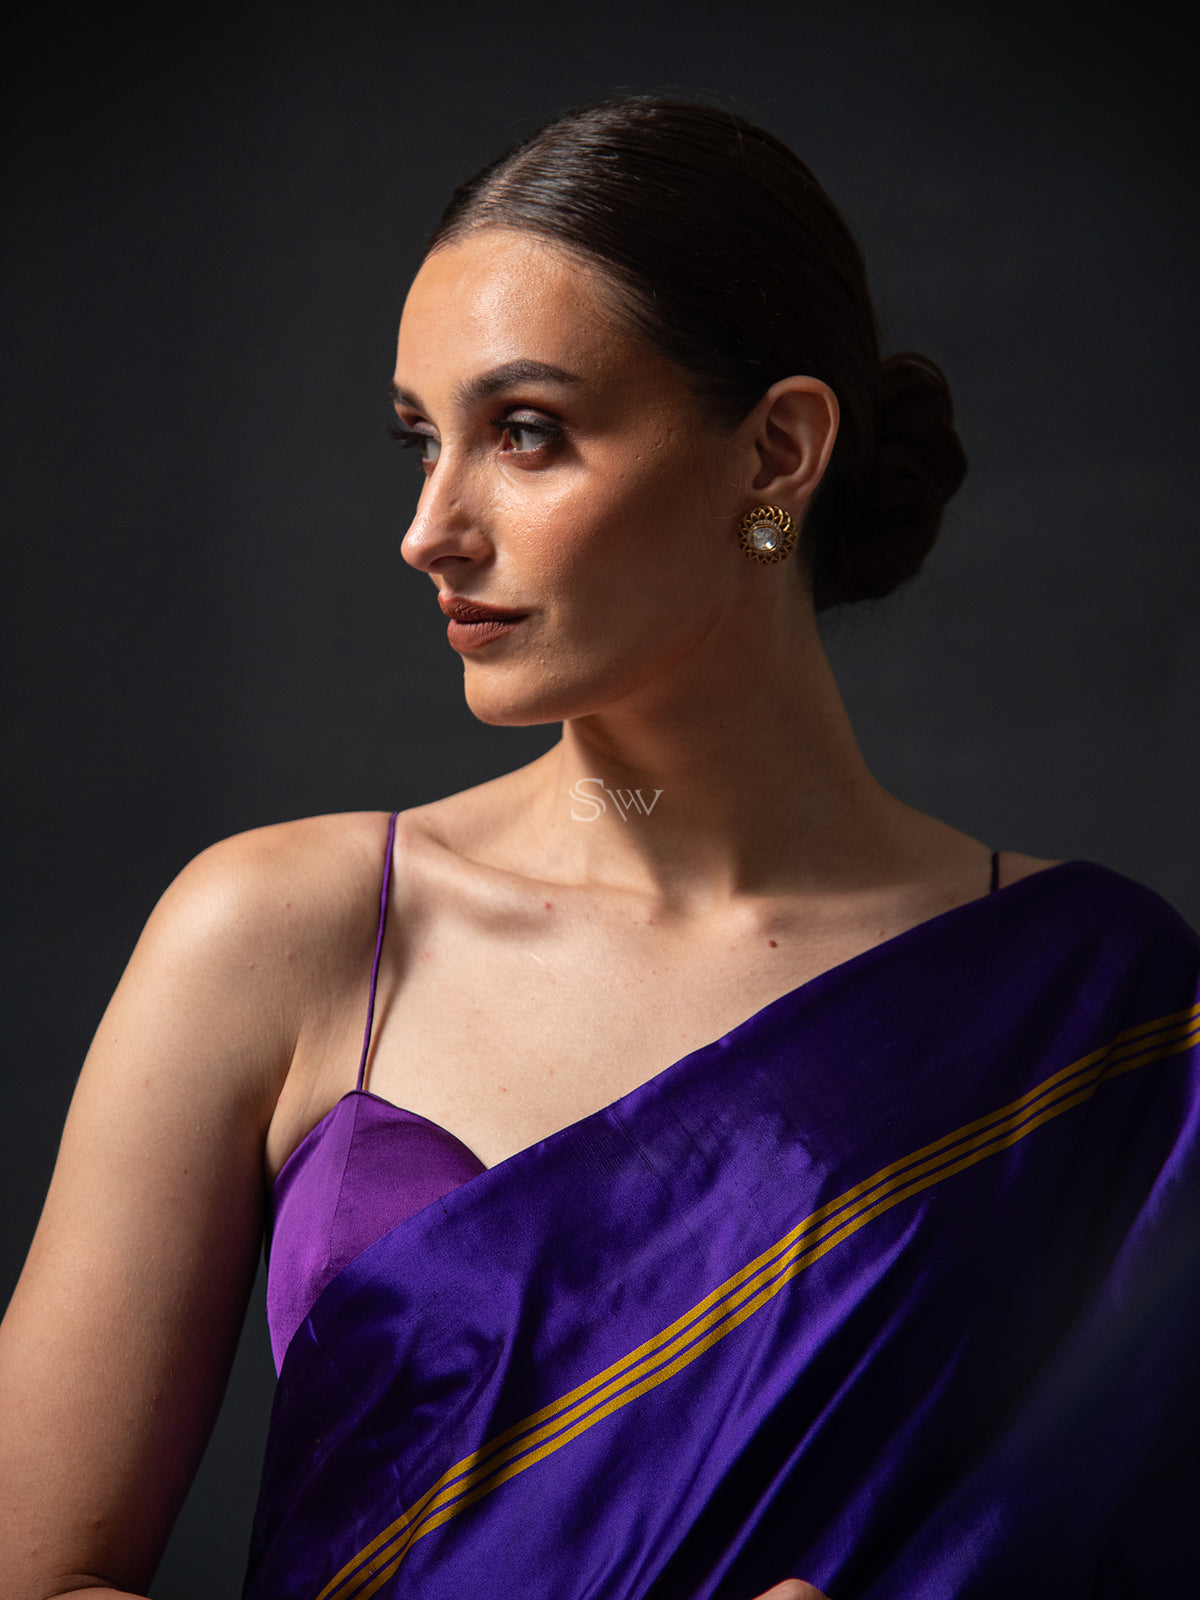 Purple Plain Satin Silk Handloom Banarasi Saree - Sacred Weaves